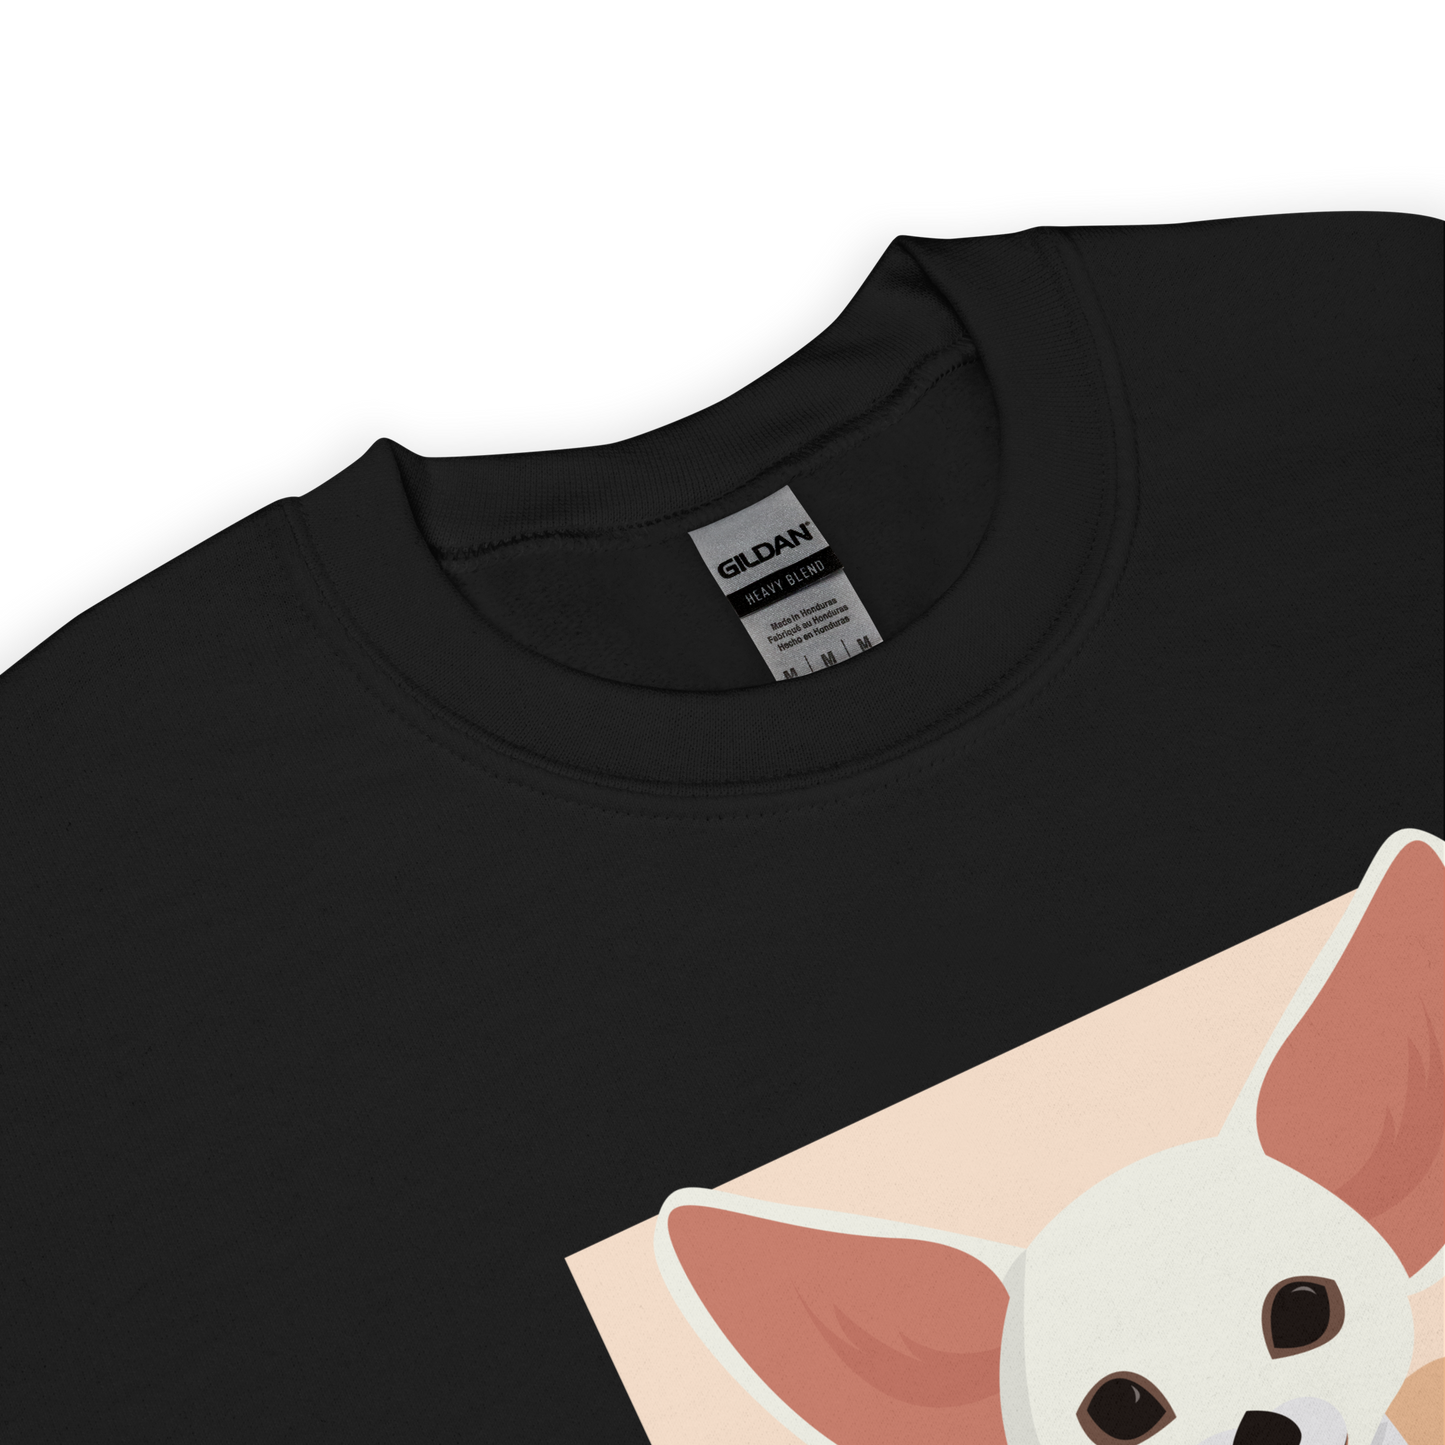 Product Details of a Black Fennec Fox Sweatshirt featuring a cute Dessert Addict graphic on the chest - Funny Graphic Fennec Fox Sweatshirts - Boozy Fox